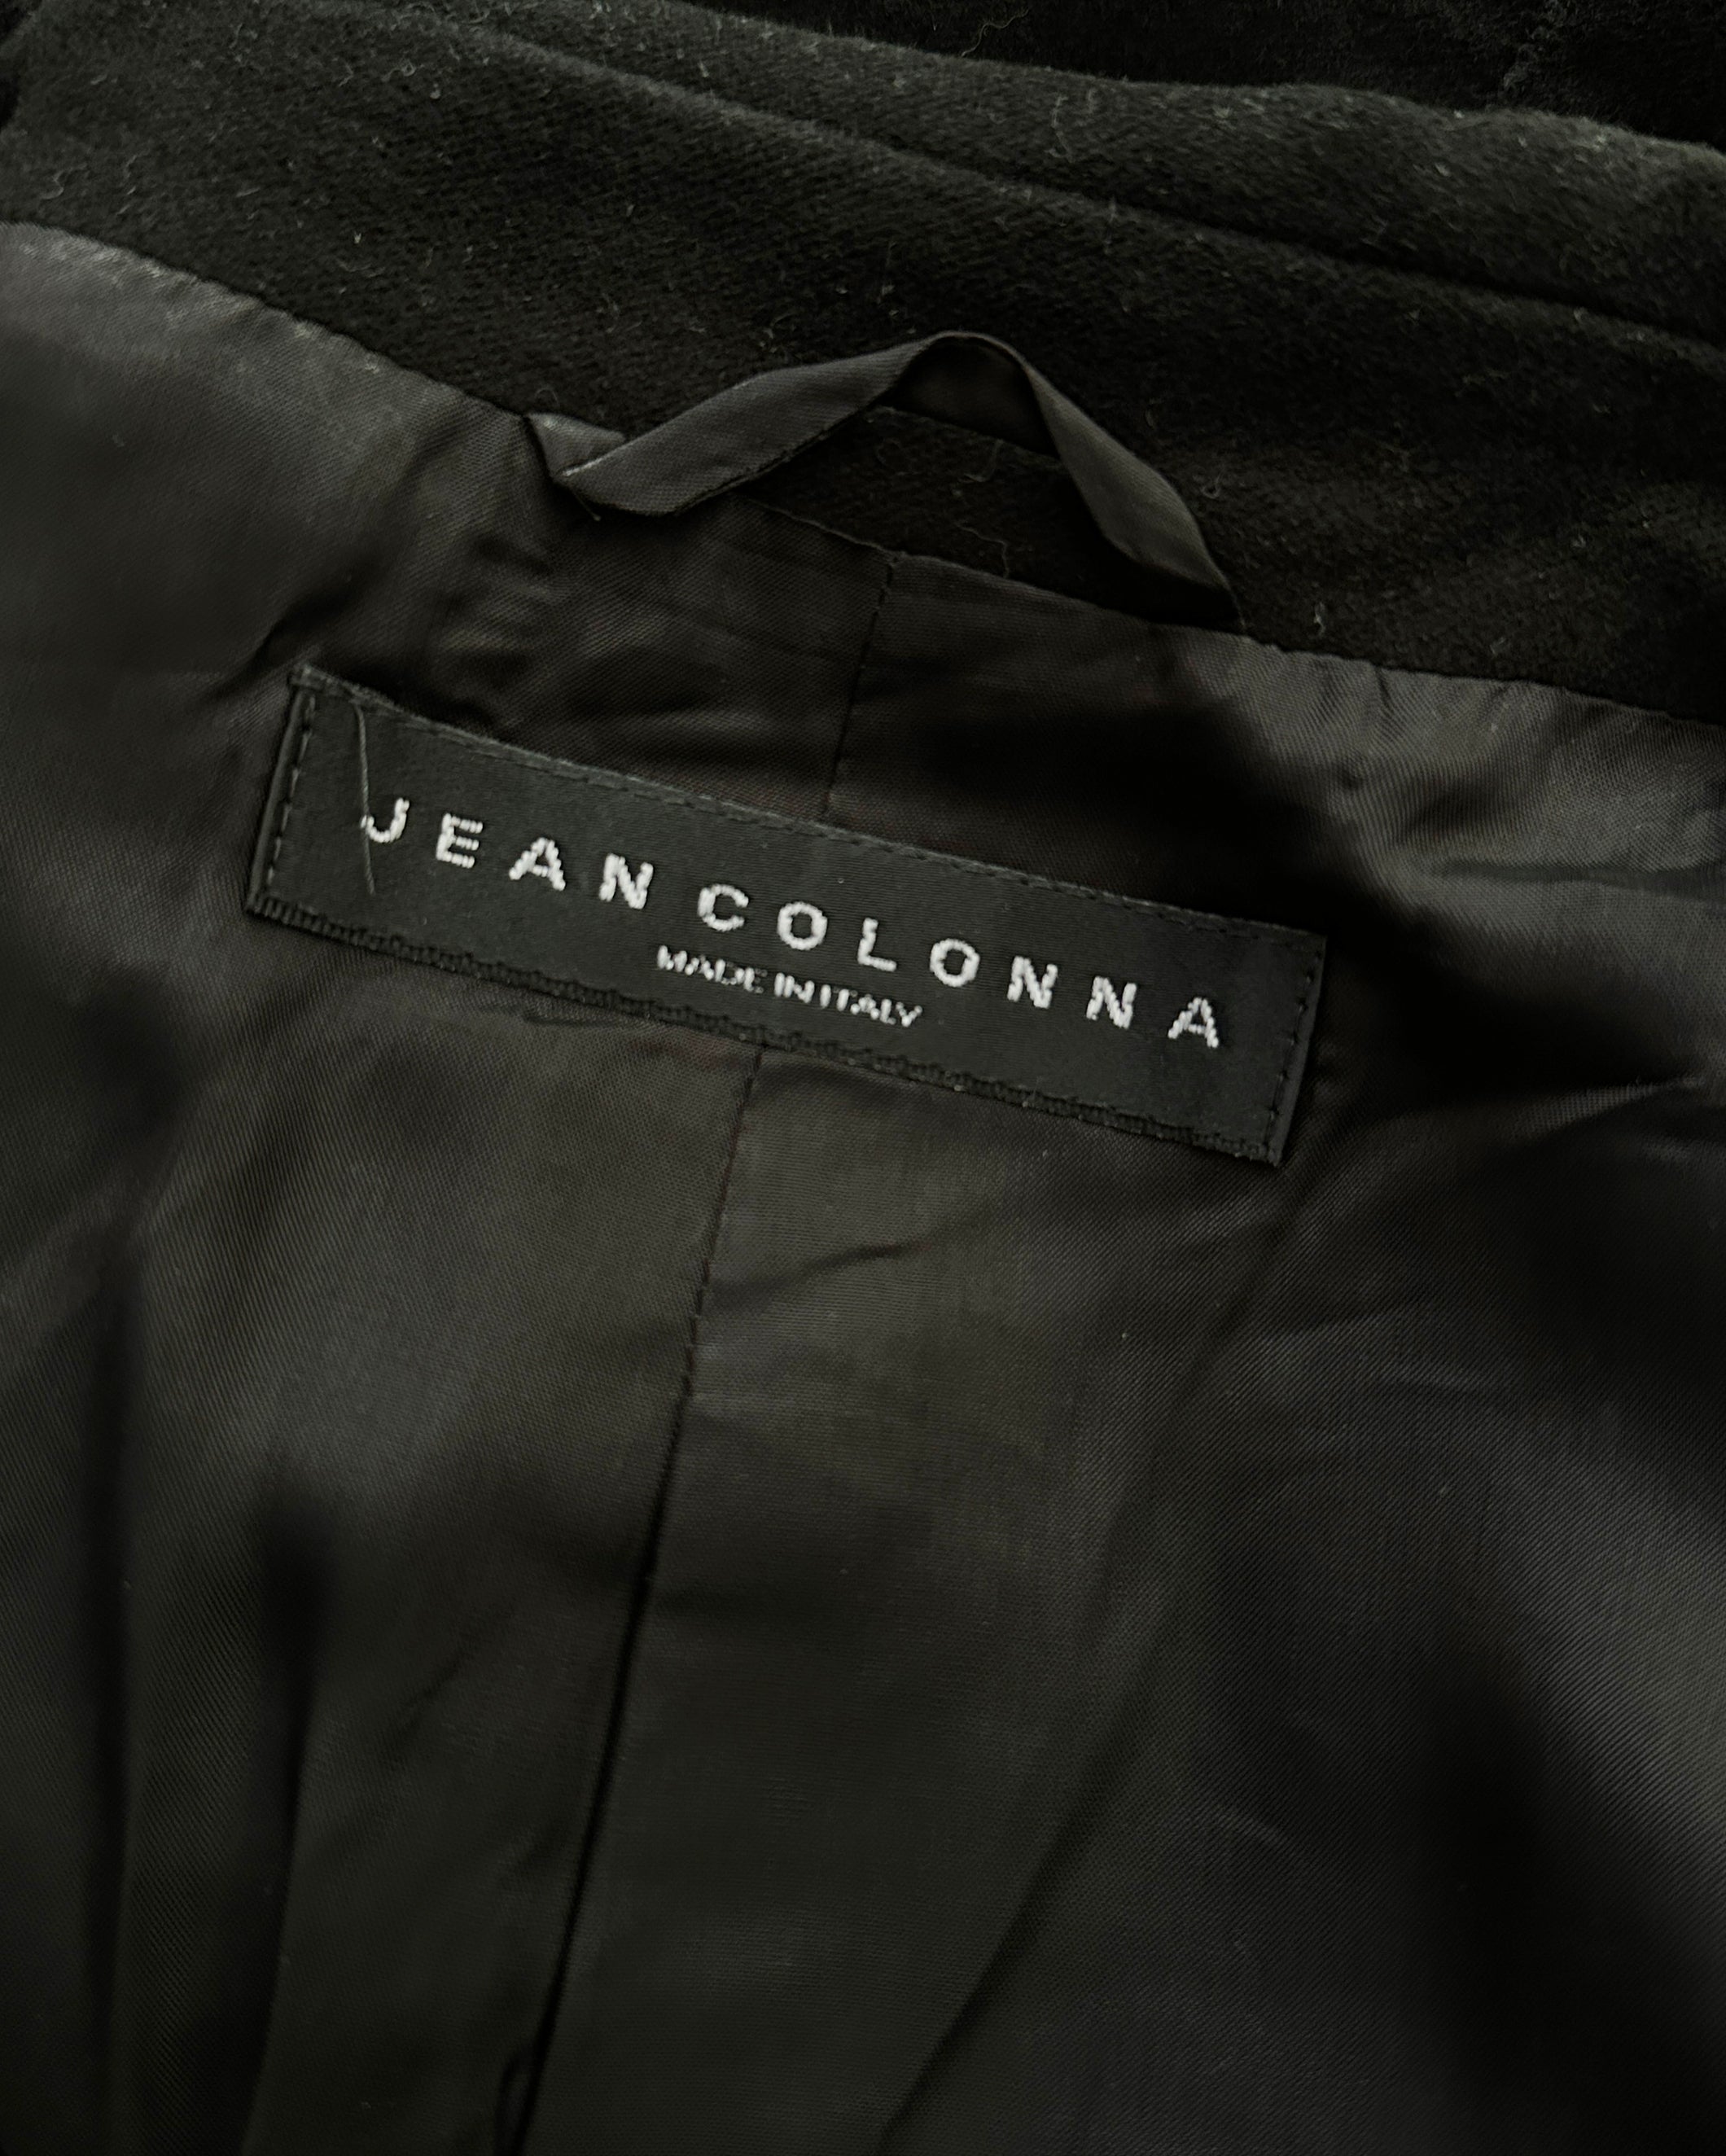 JEAN COLONNA FW1998 Sequin Jacket S/M